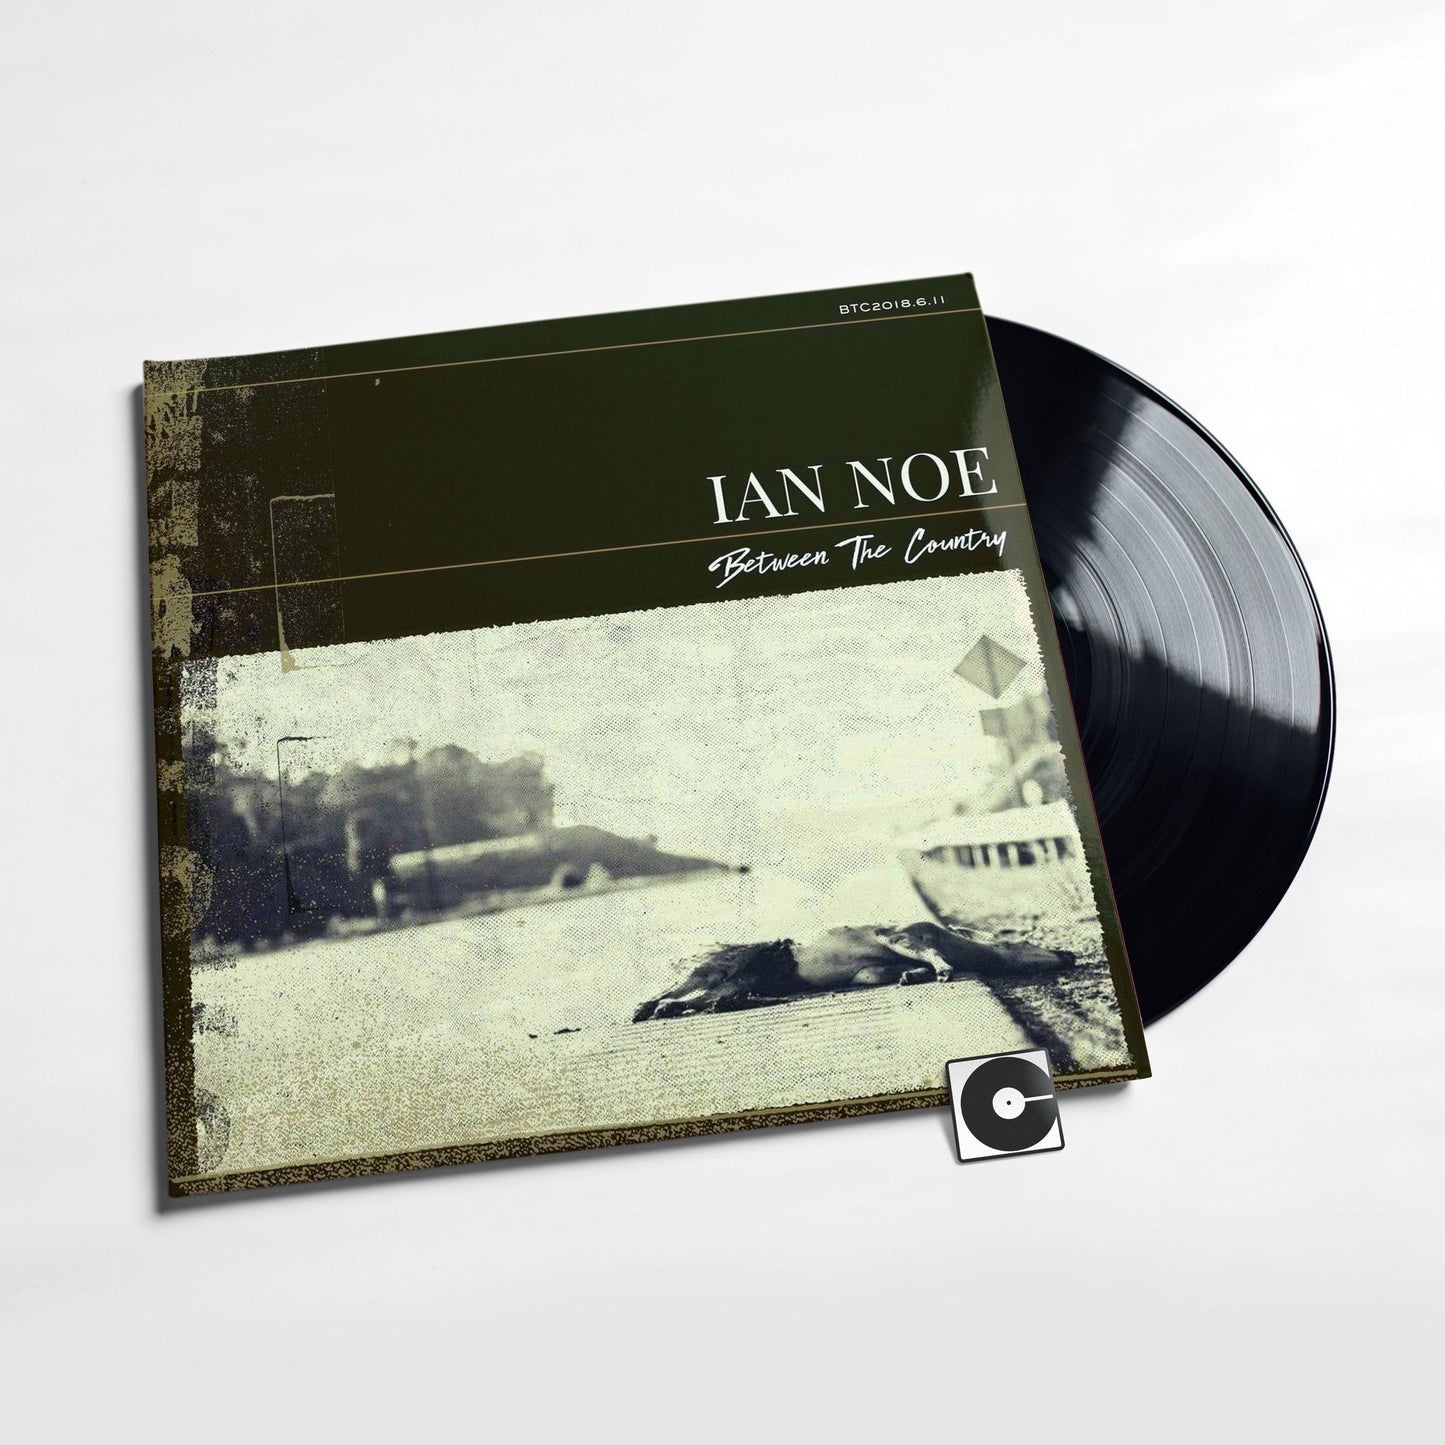 Ian Noe - "Between The Country"